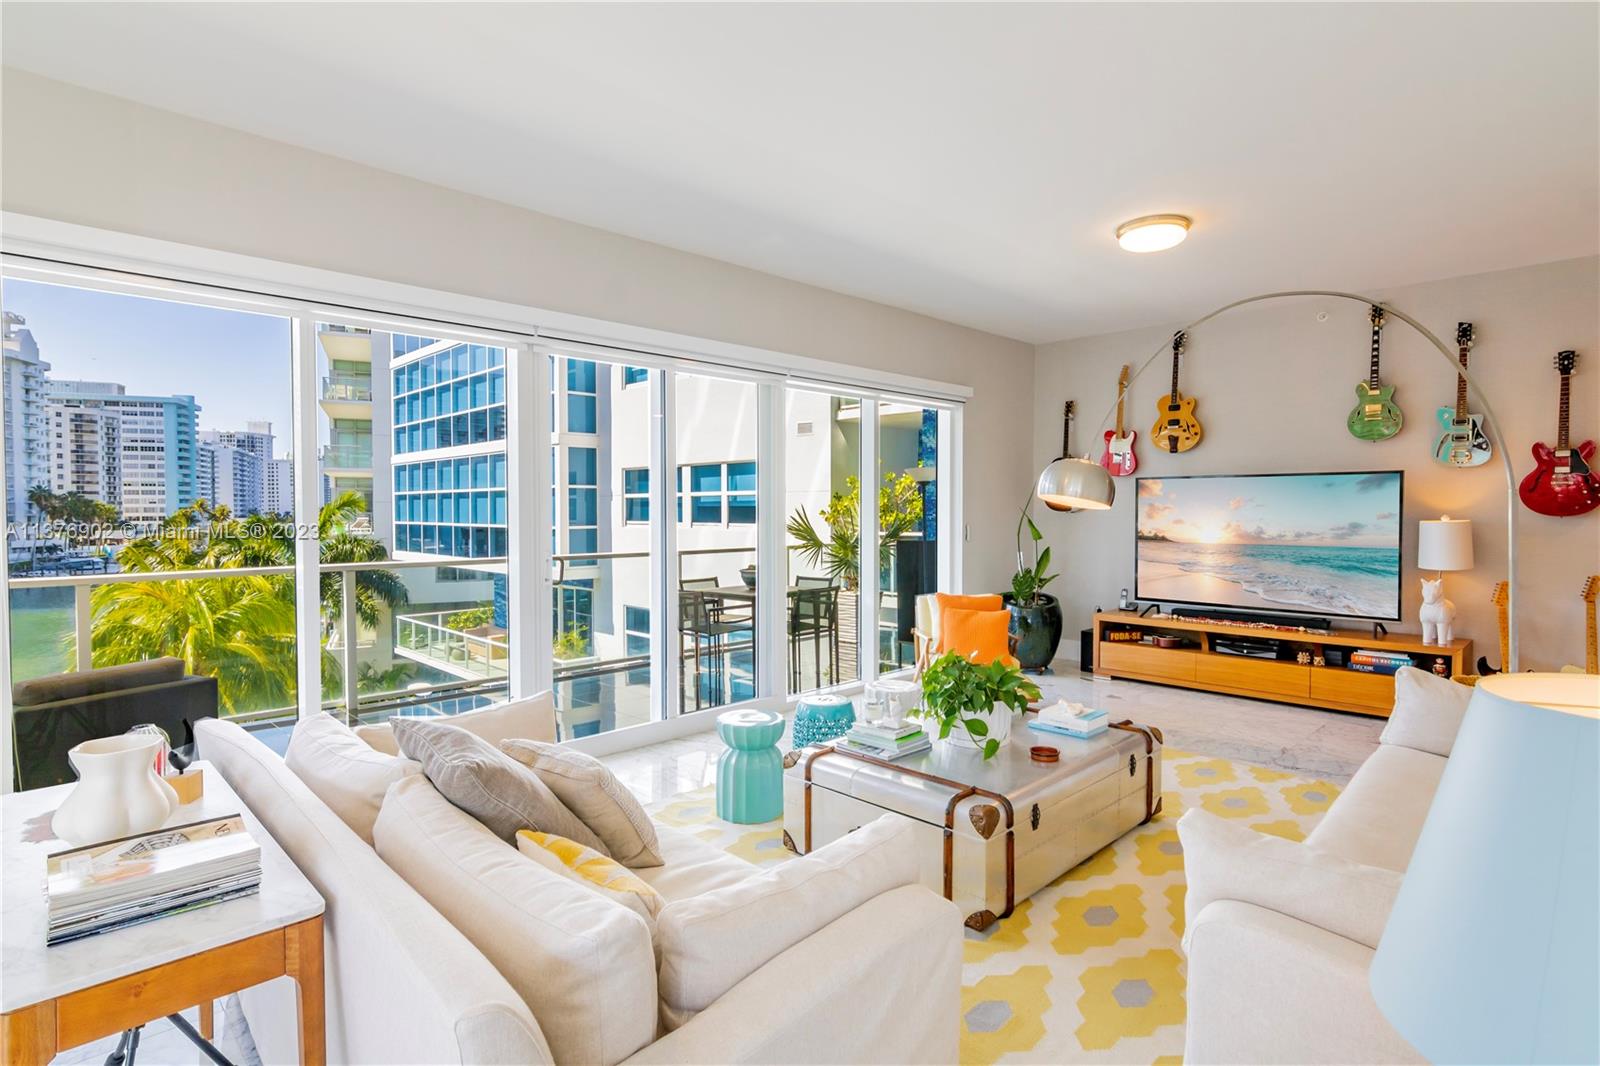 Property for Sale at 6103 Aqua Ave 403, Miami Beach, Miami-Dade County, Florida - Bedrooms: 3 
Bathrooms: 4  - $2,895,000